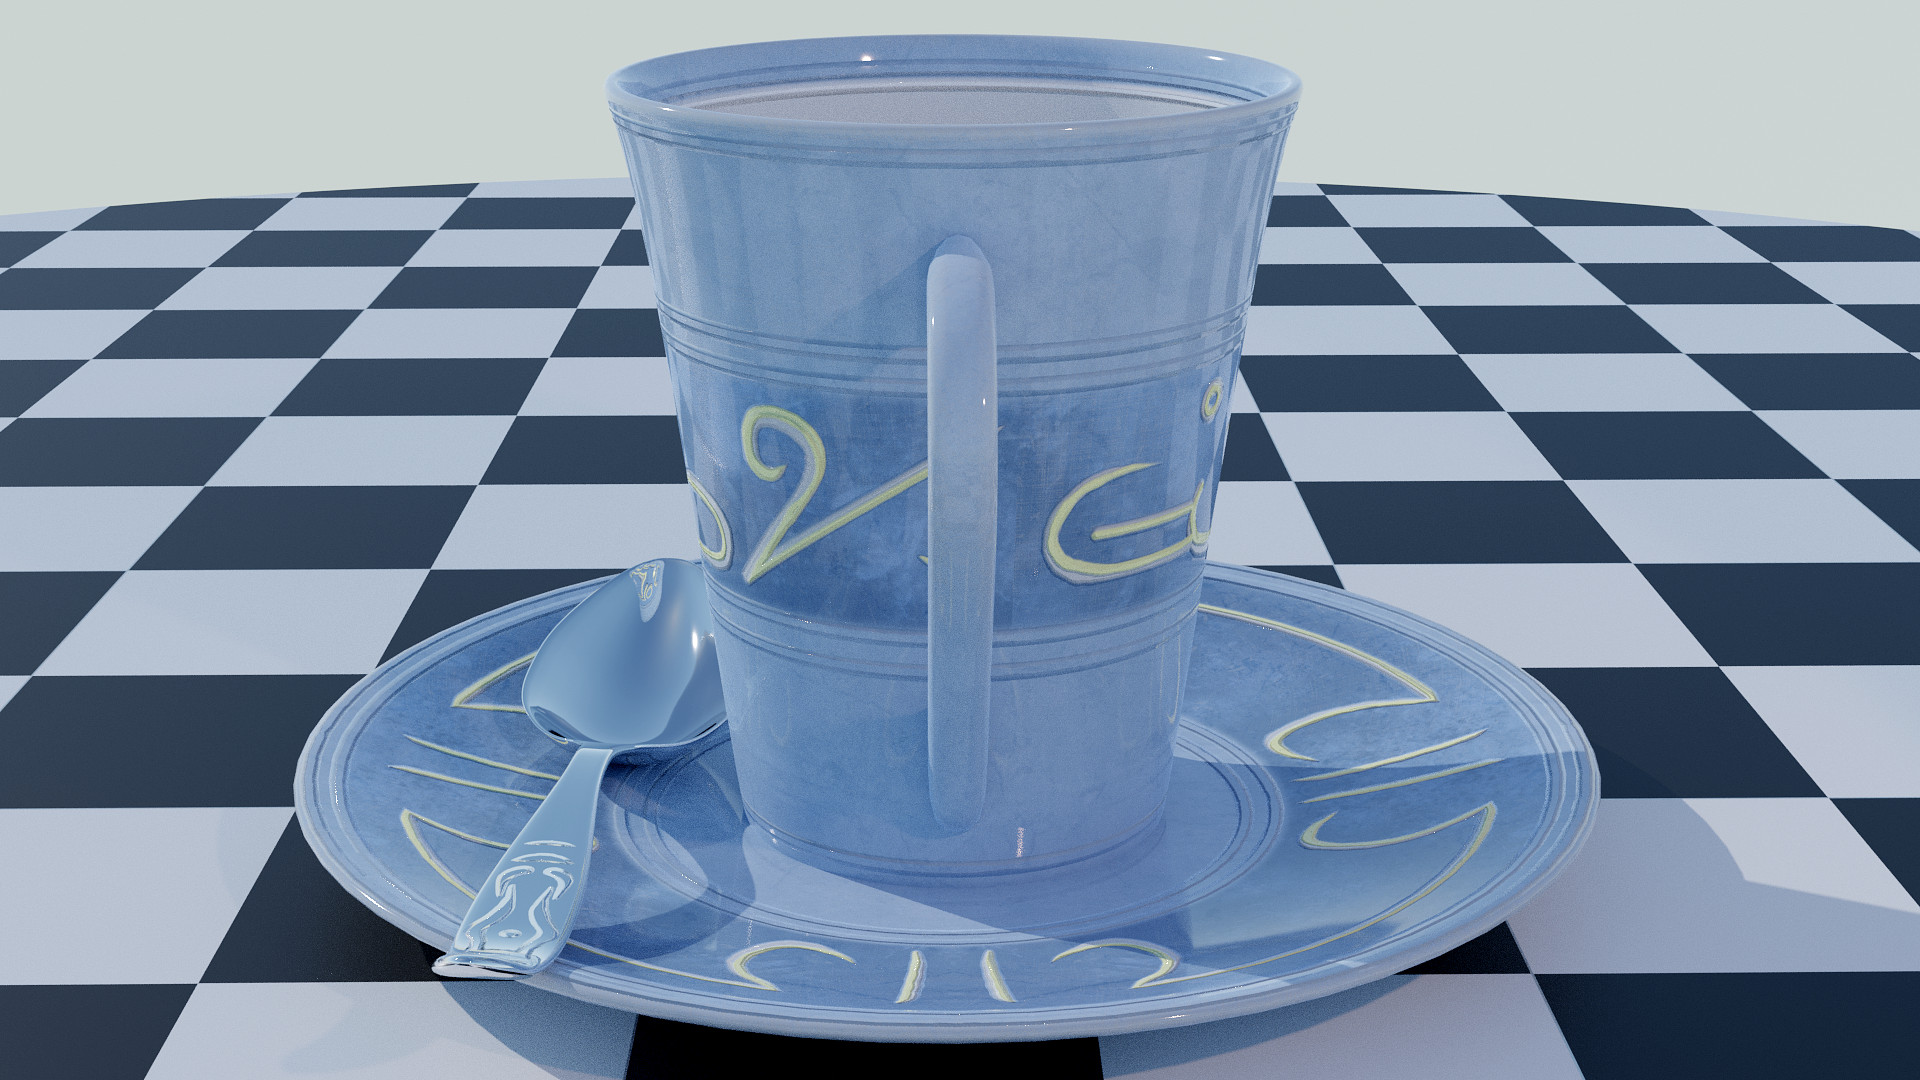 Tea Cup Set - Symbols preview image 3